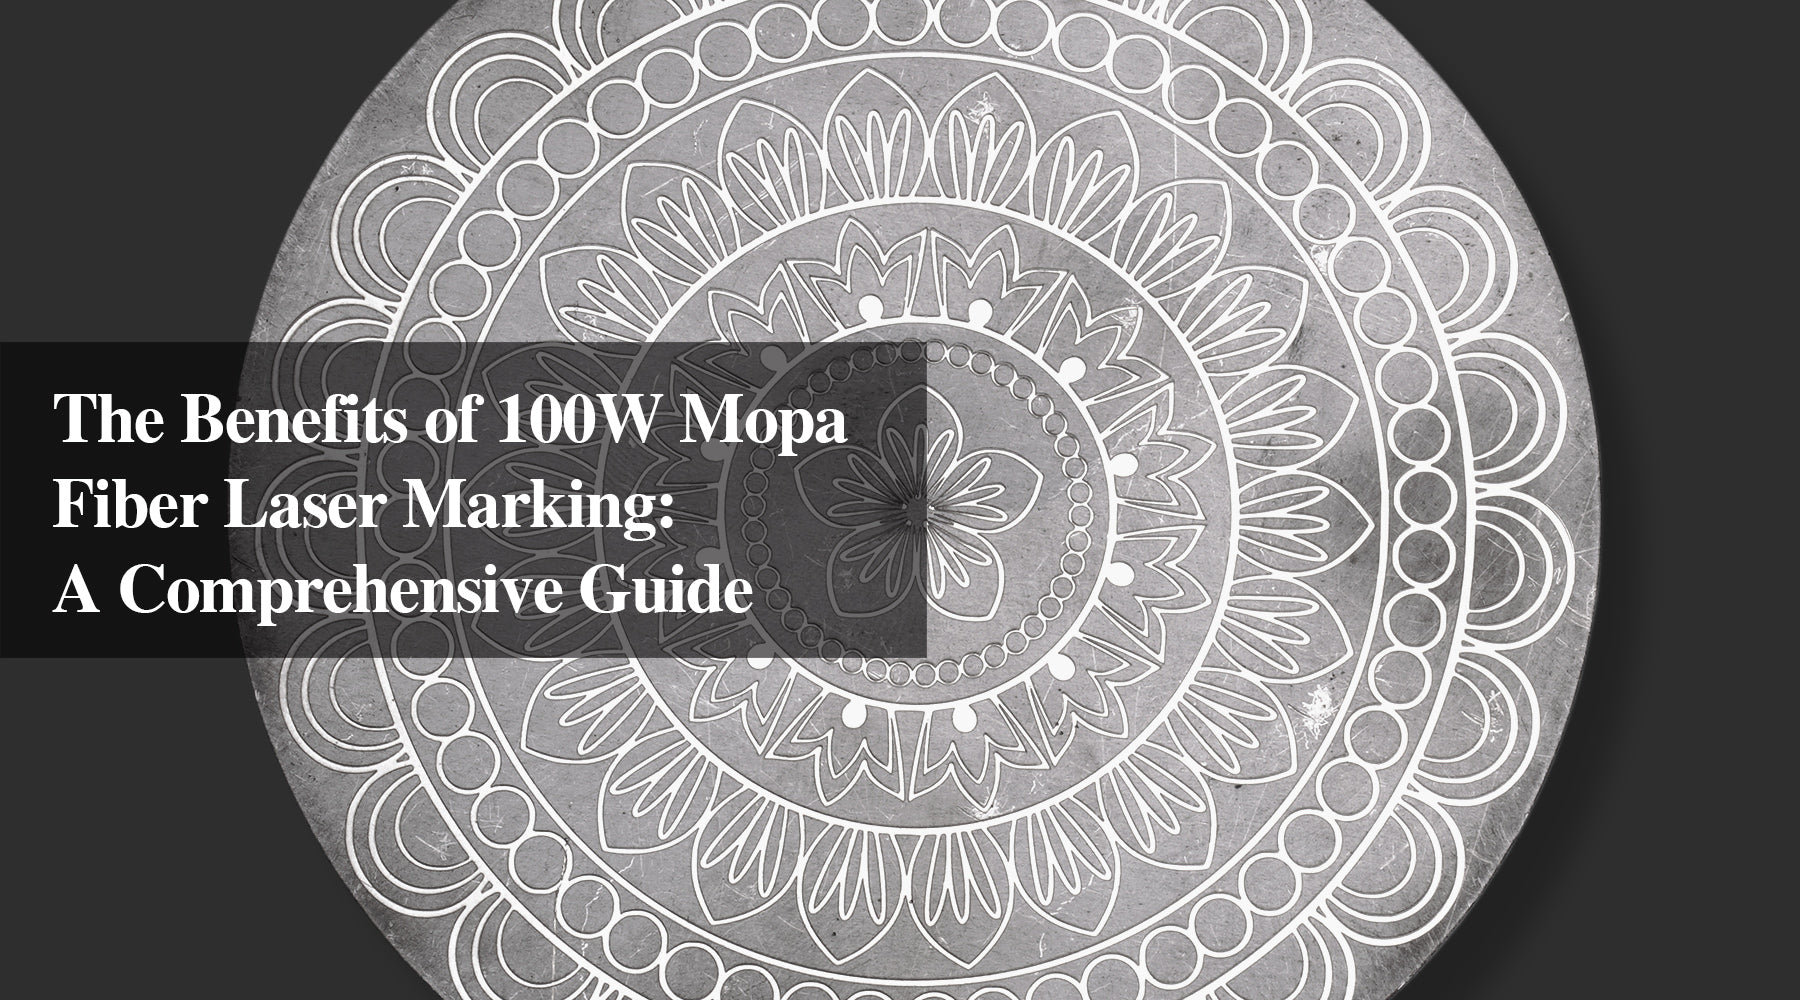 The Benefits of 100W Mopa Fiber Laser Marking: A Comprehensive Guide